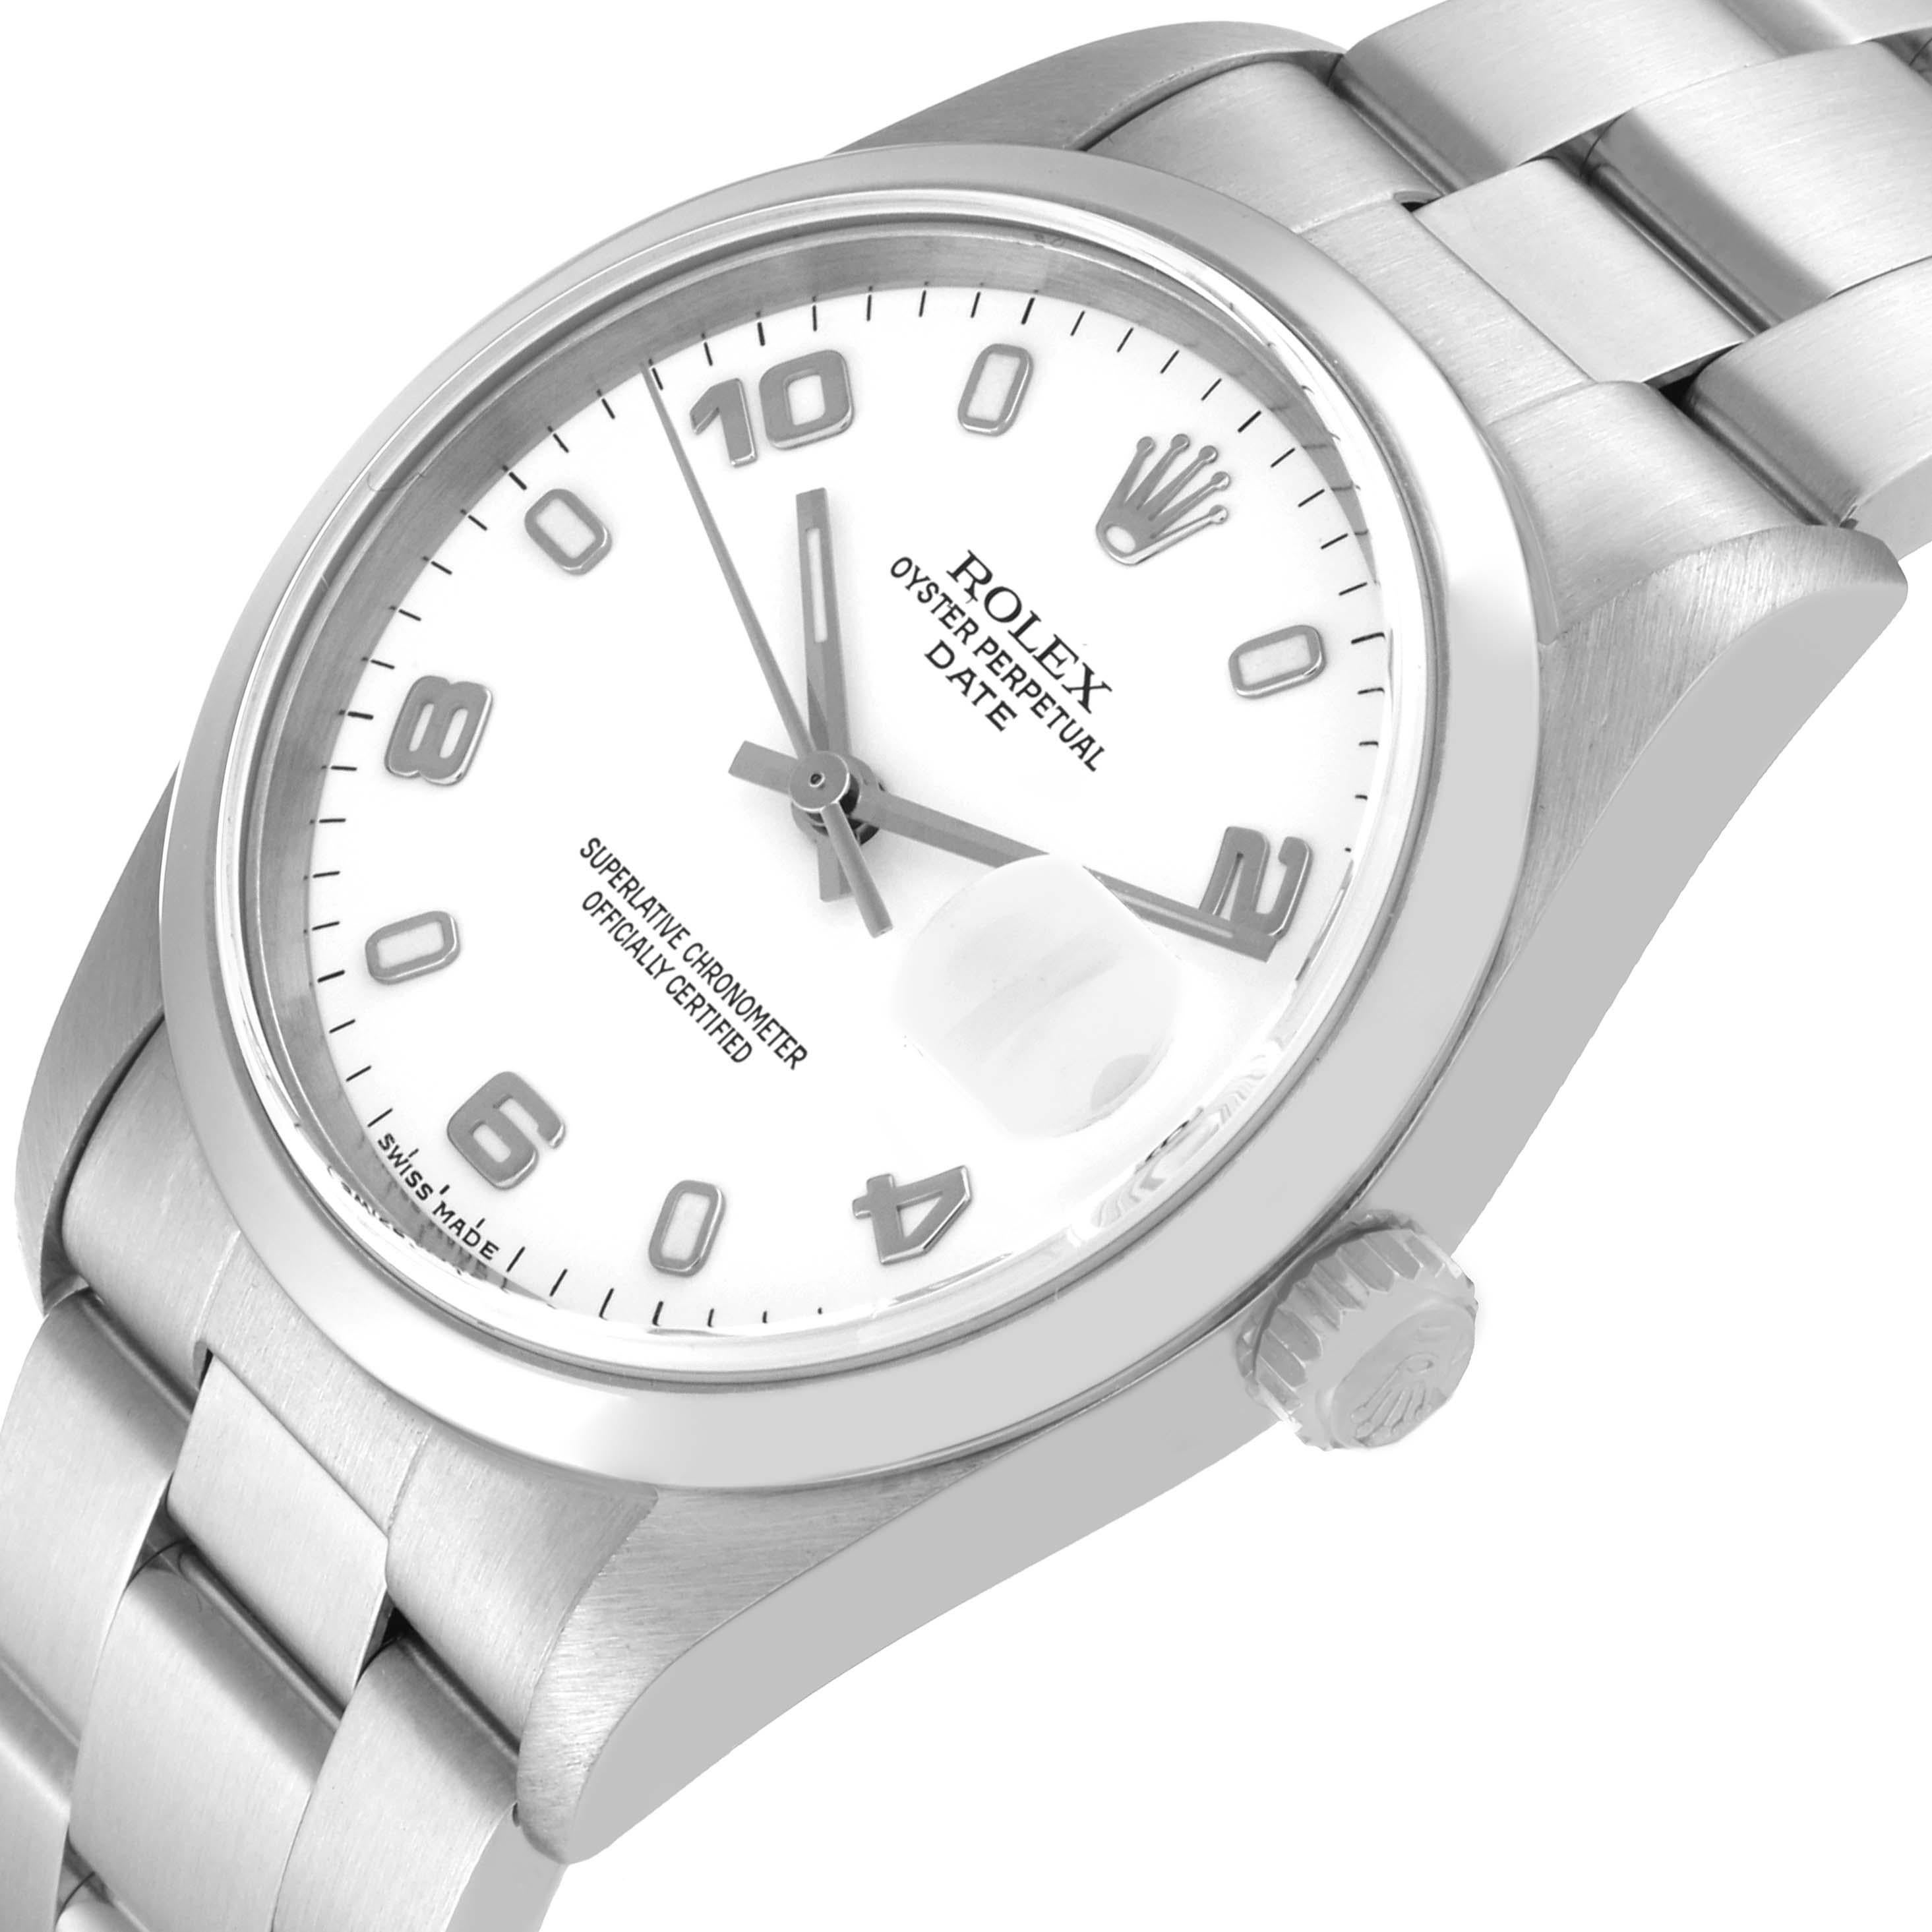 Rolex Date White Dial Oyster Bracelet Steel Mens Watch 15200 1